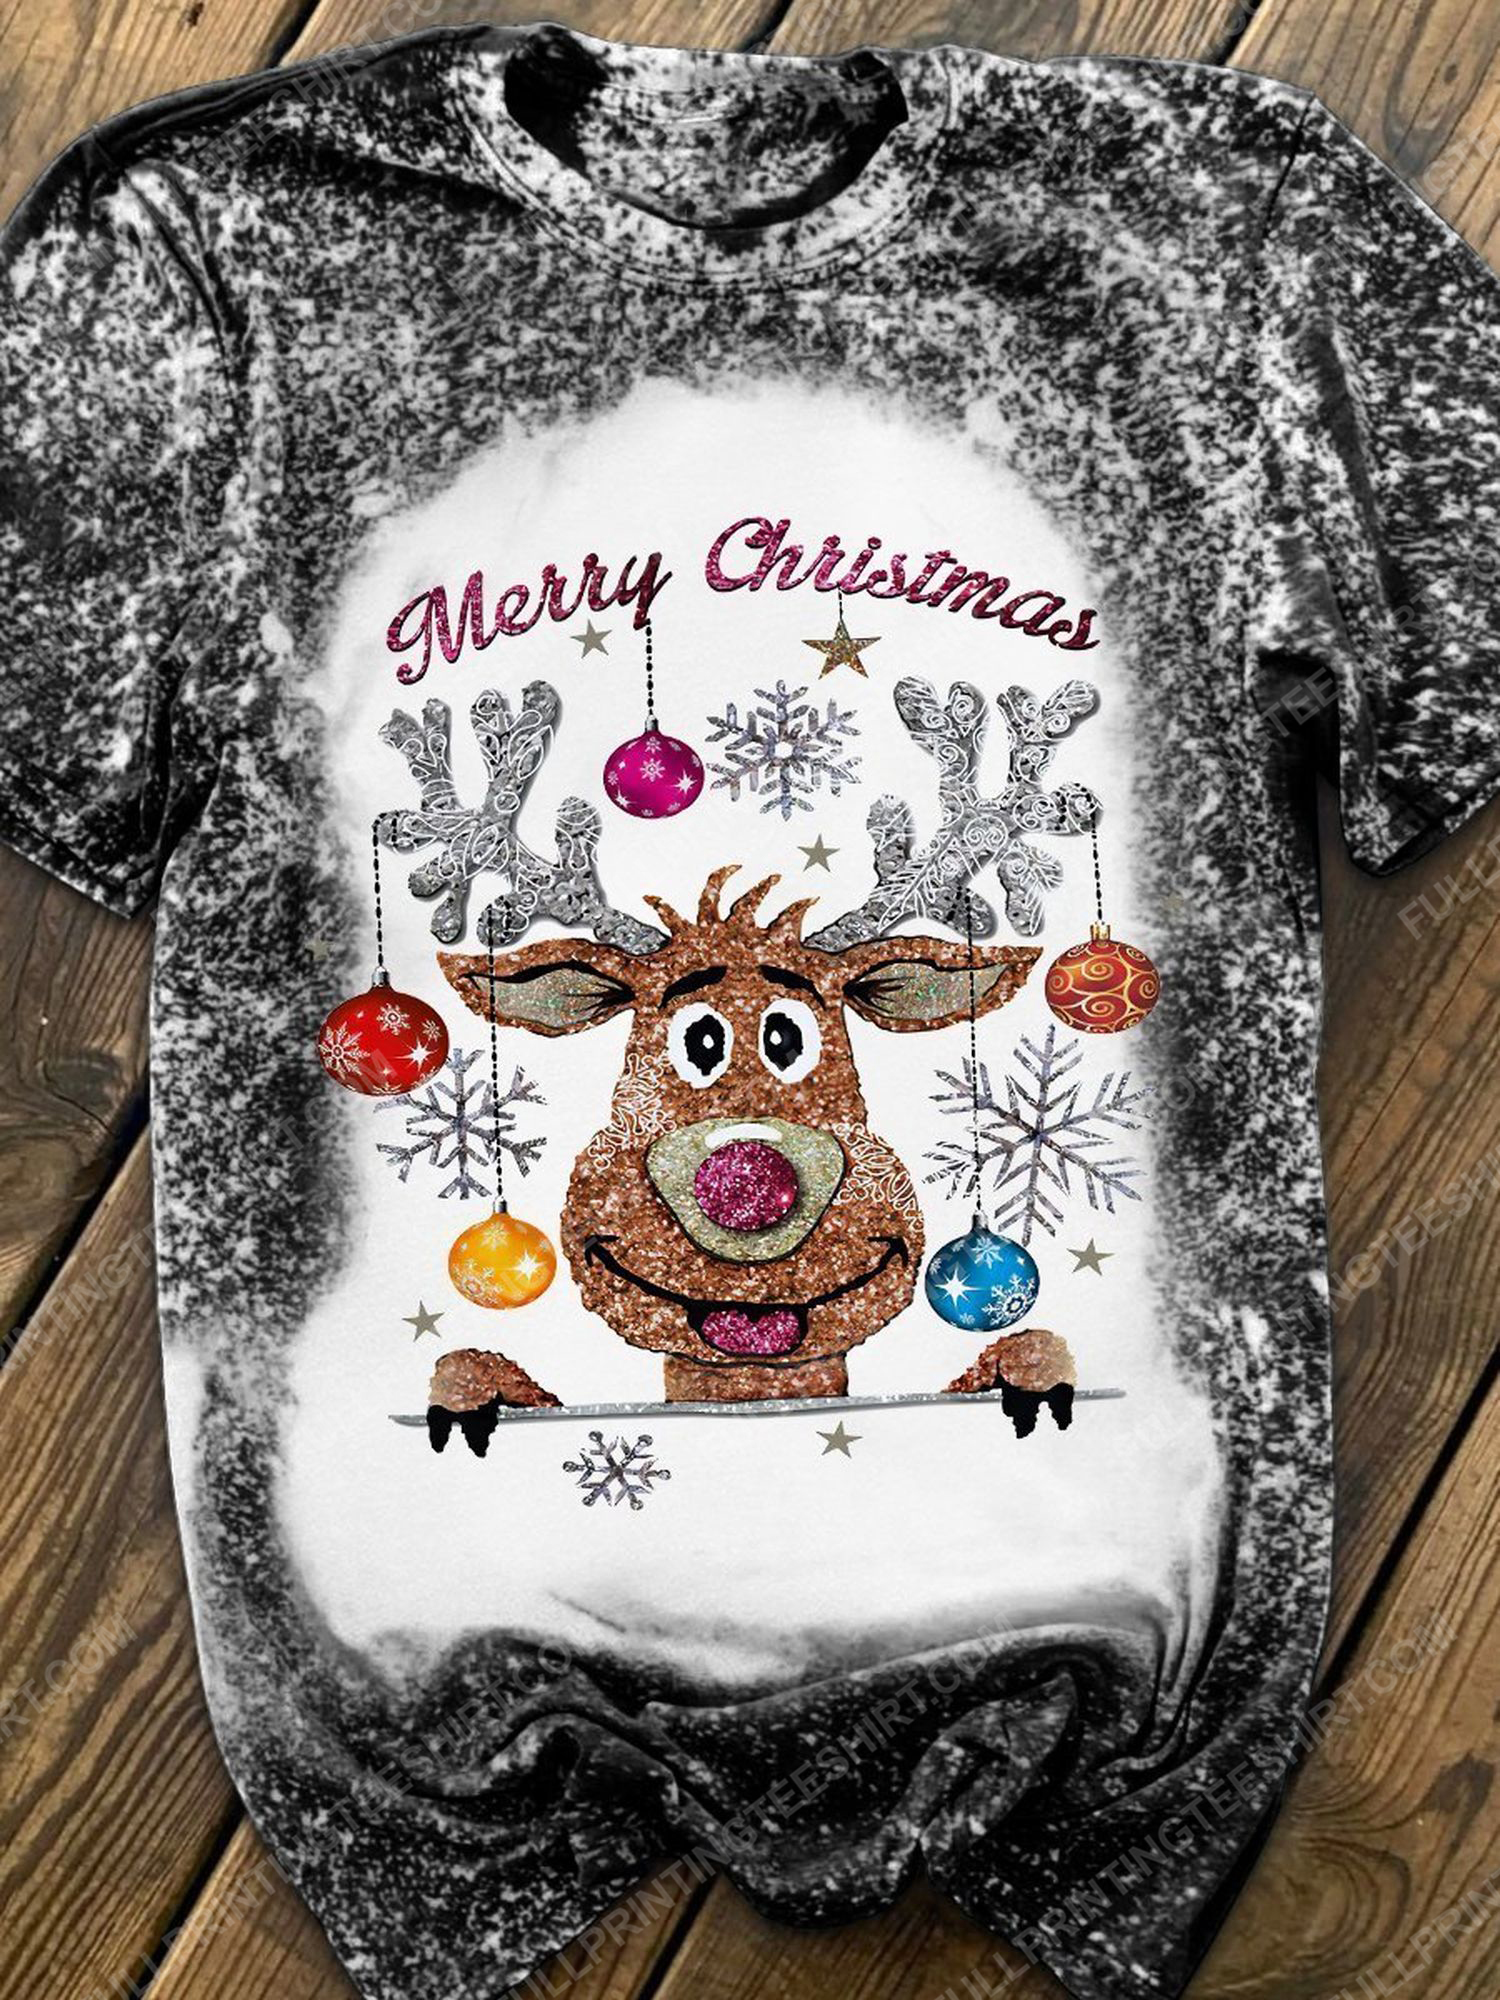 Reindeer and snow merry christmas full print shirtnt shirt